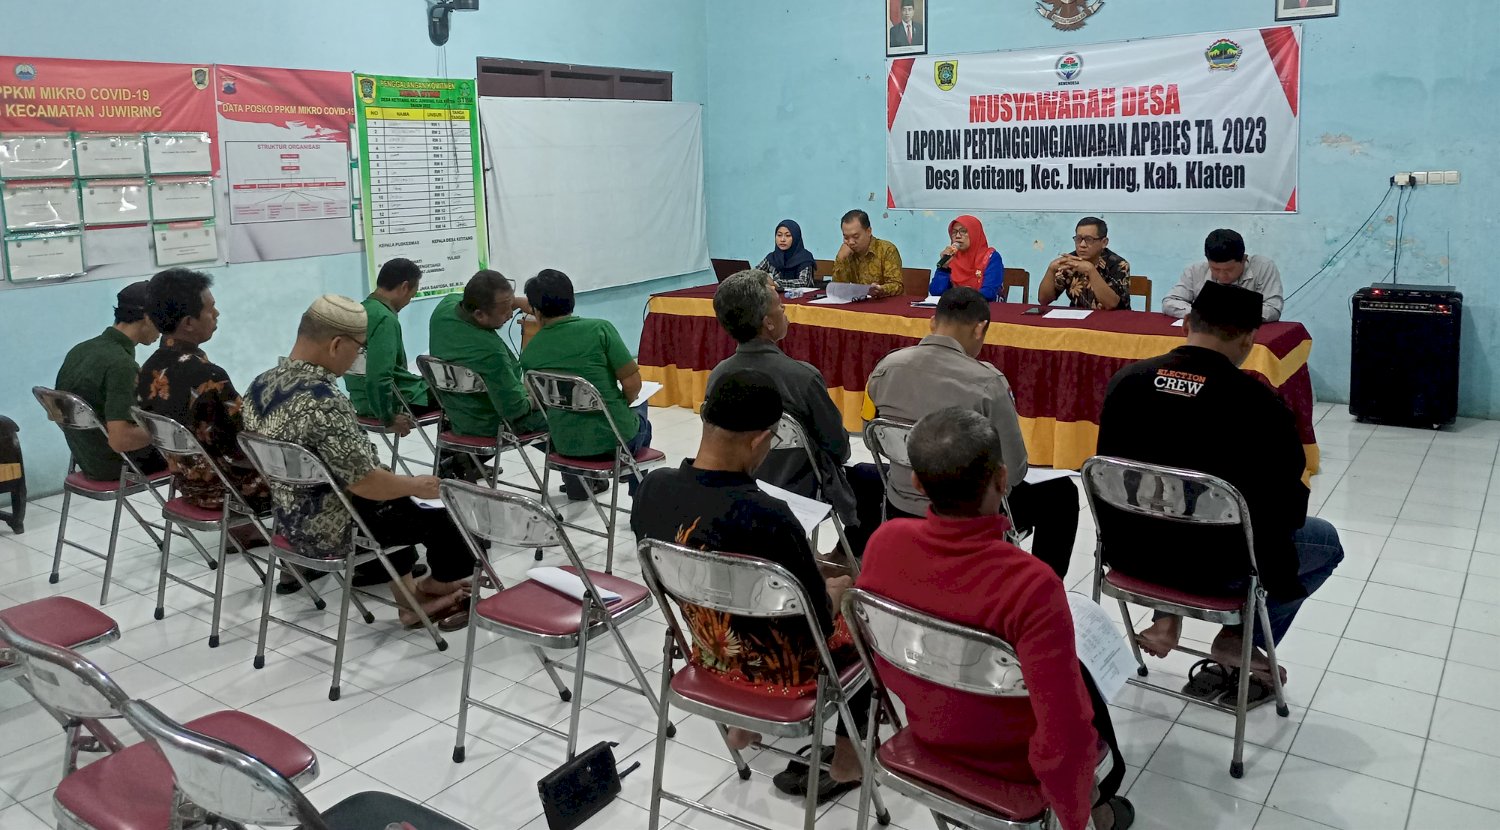 Musyawarah Desa Laporan Pertanggungjawaban APBDes 2023 Desa Ketitang